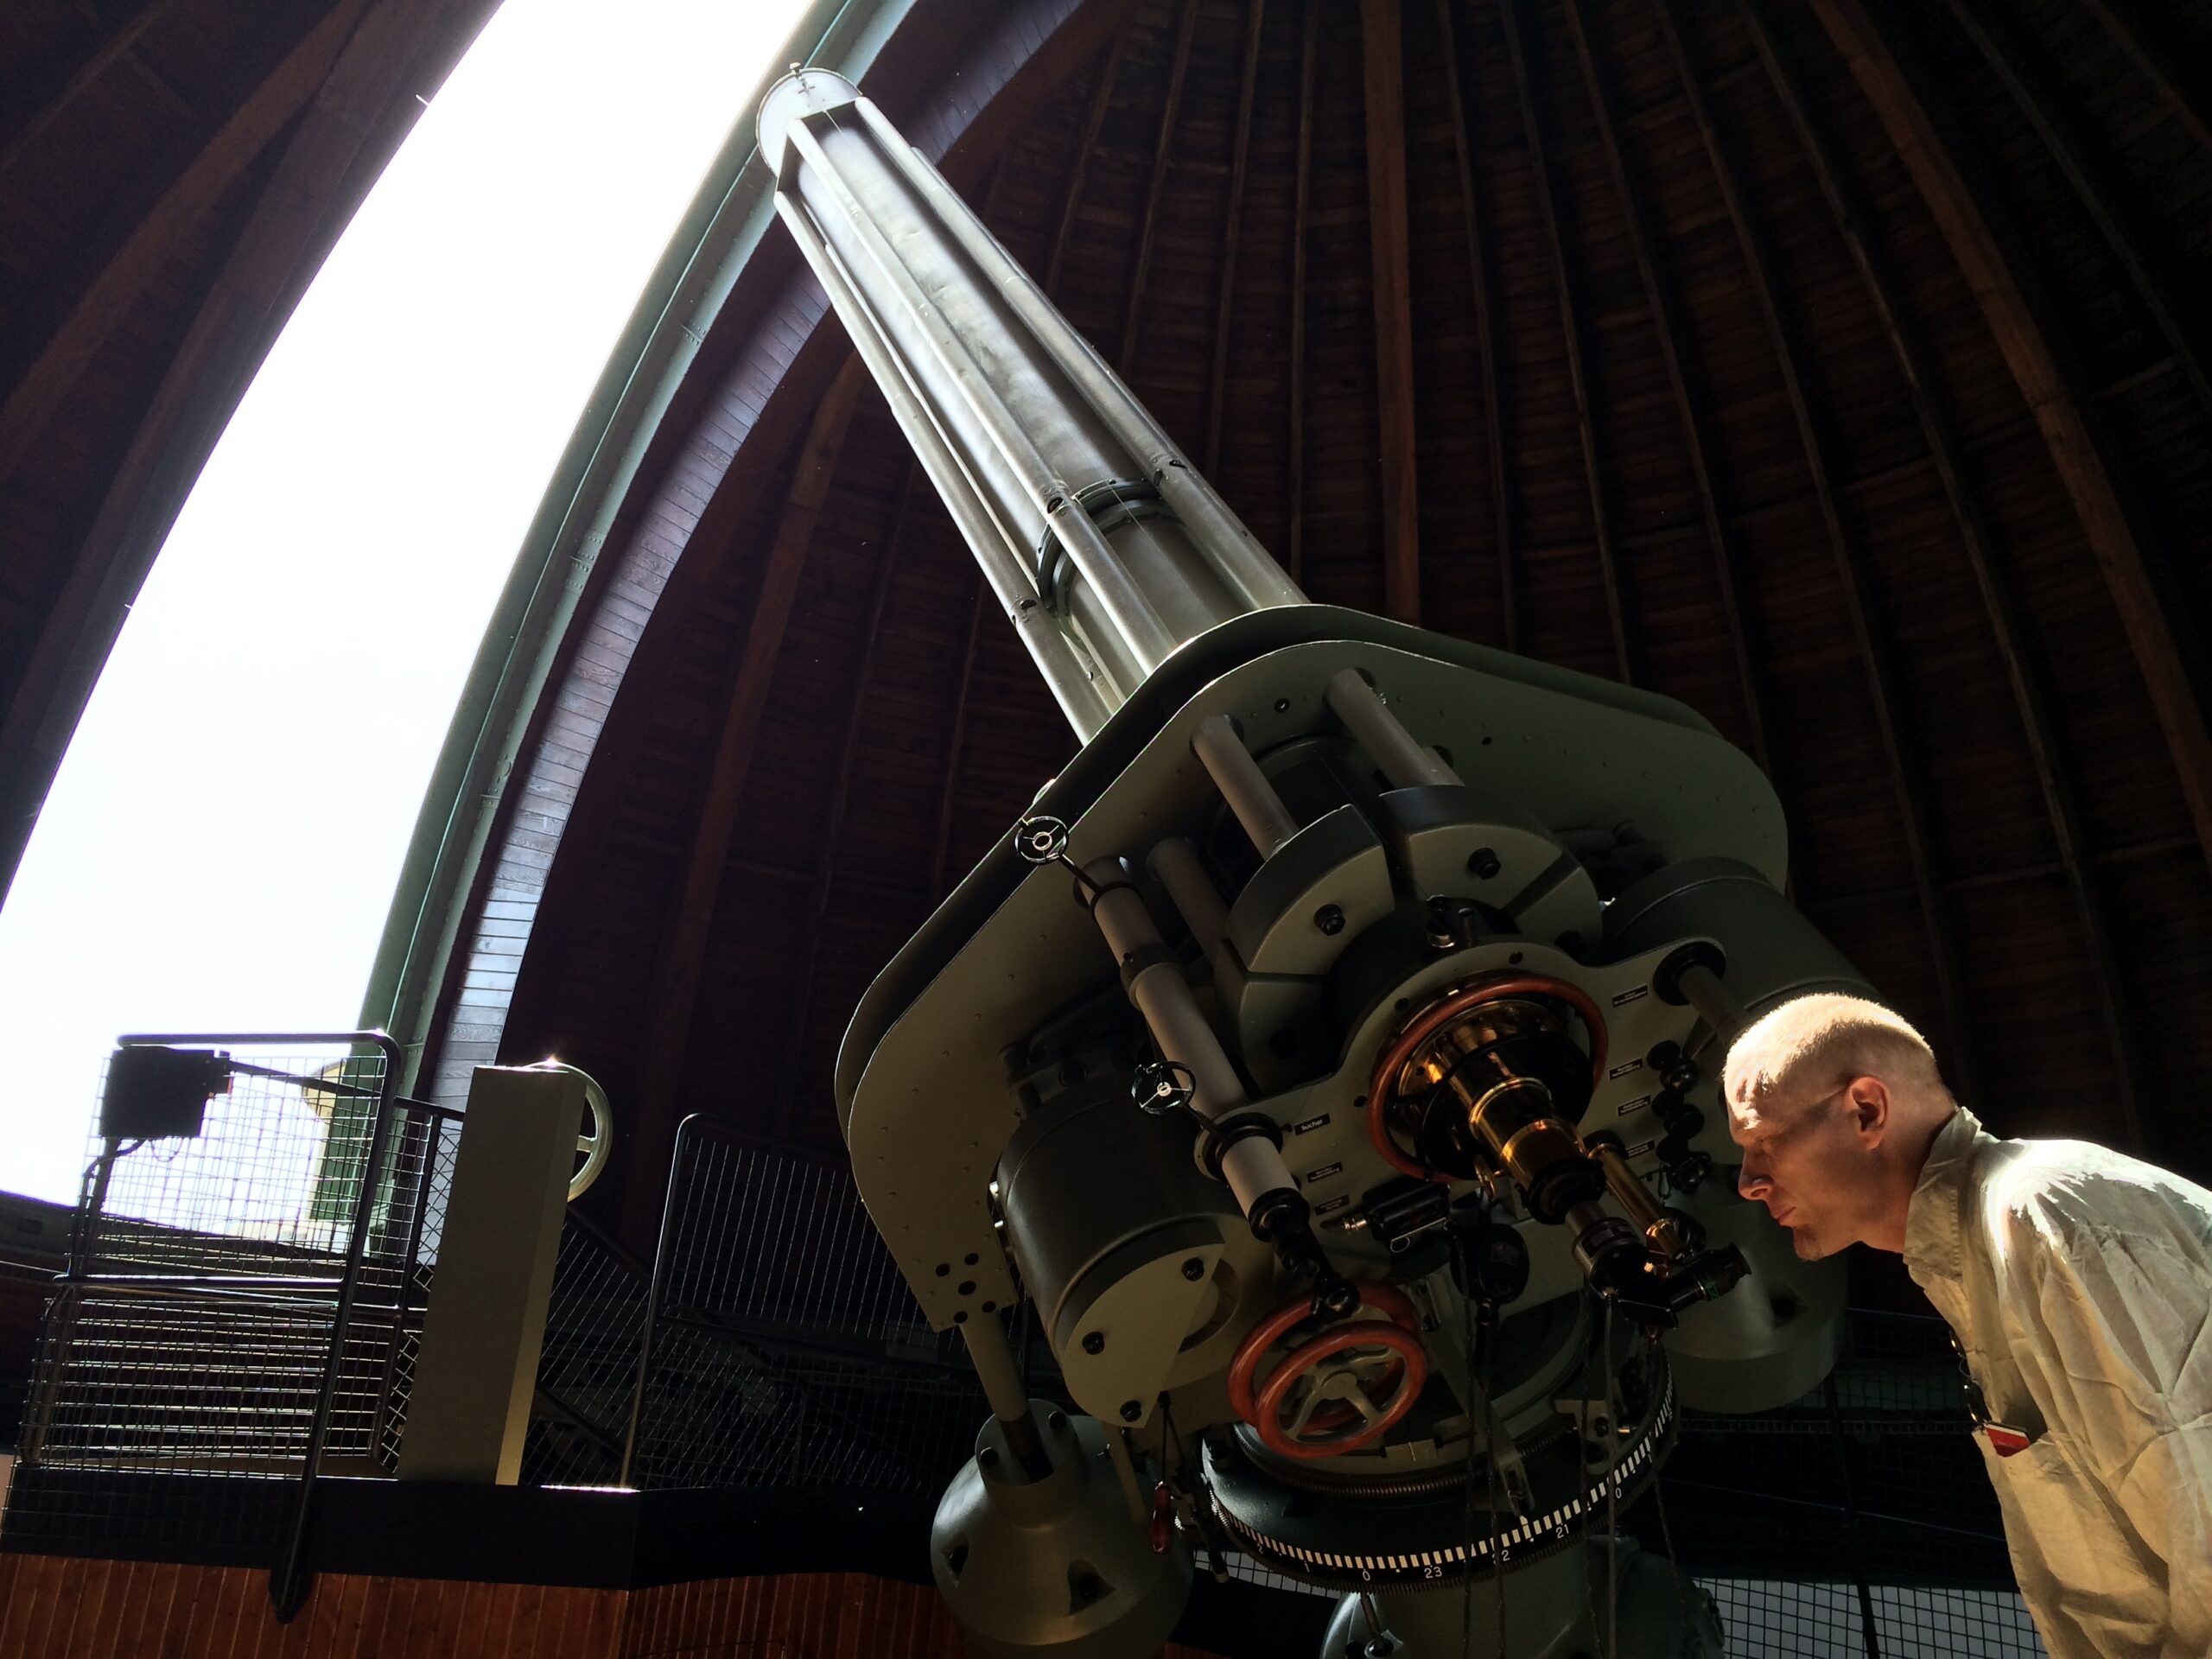 JD Stillwater looking into a telescope in Germany